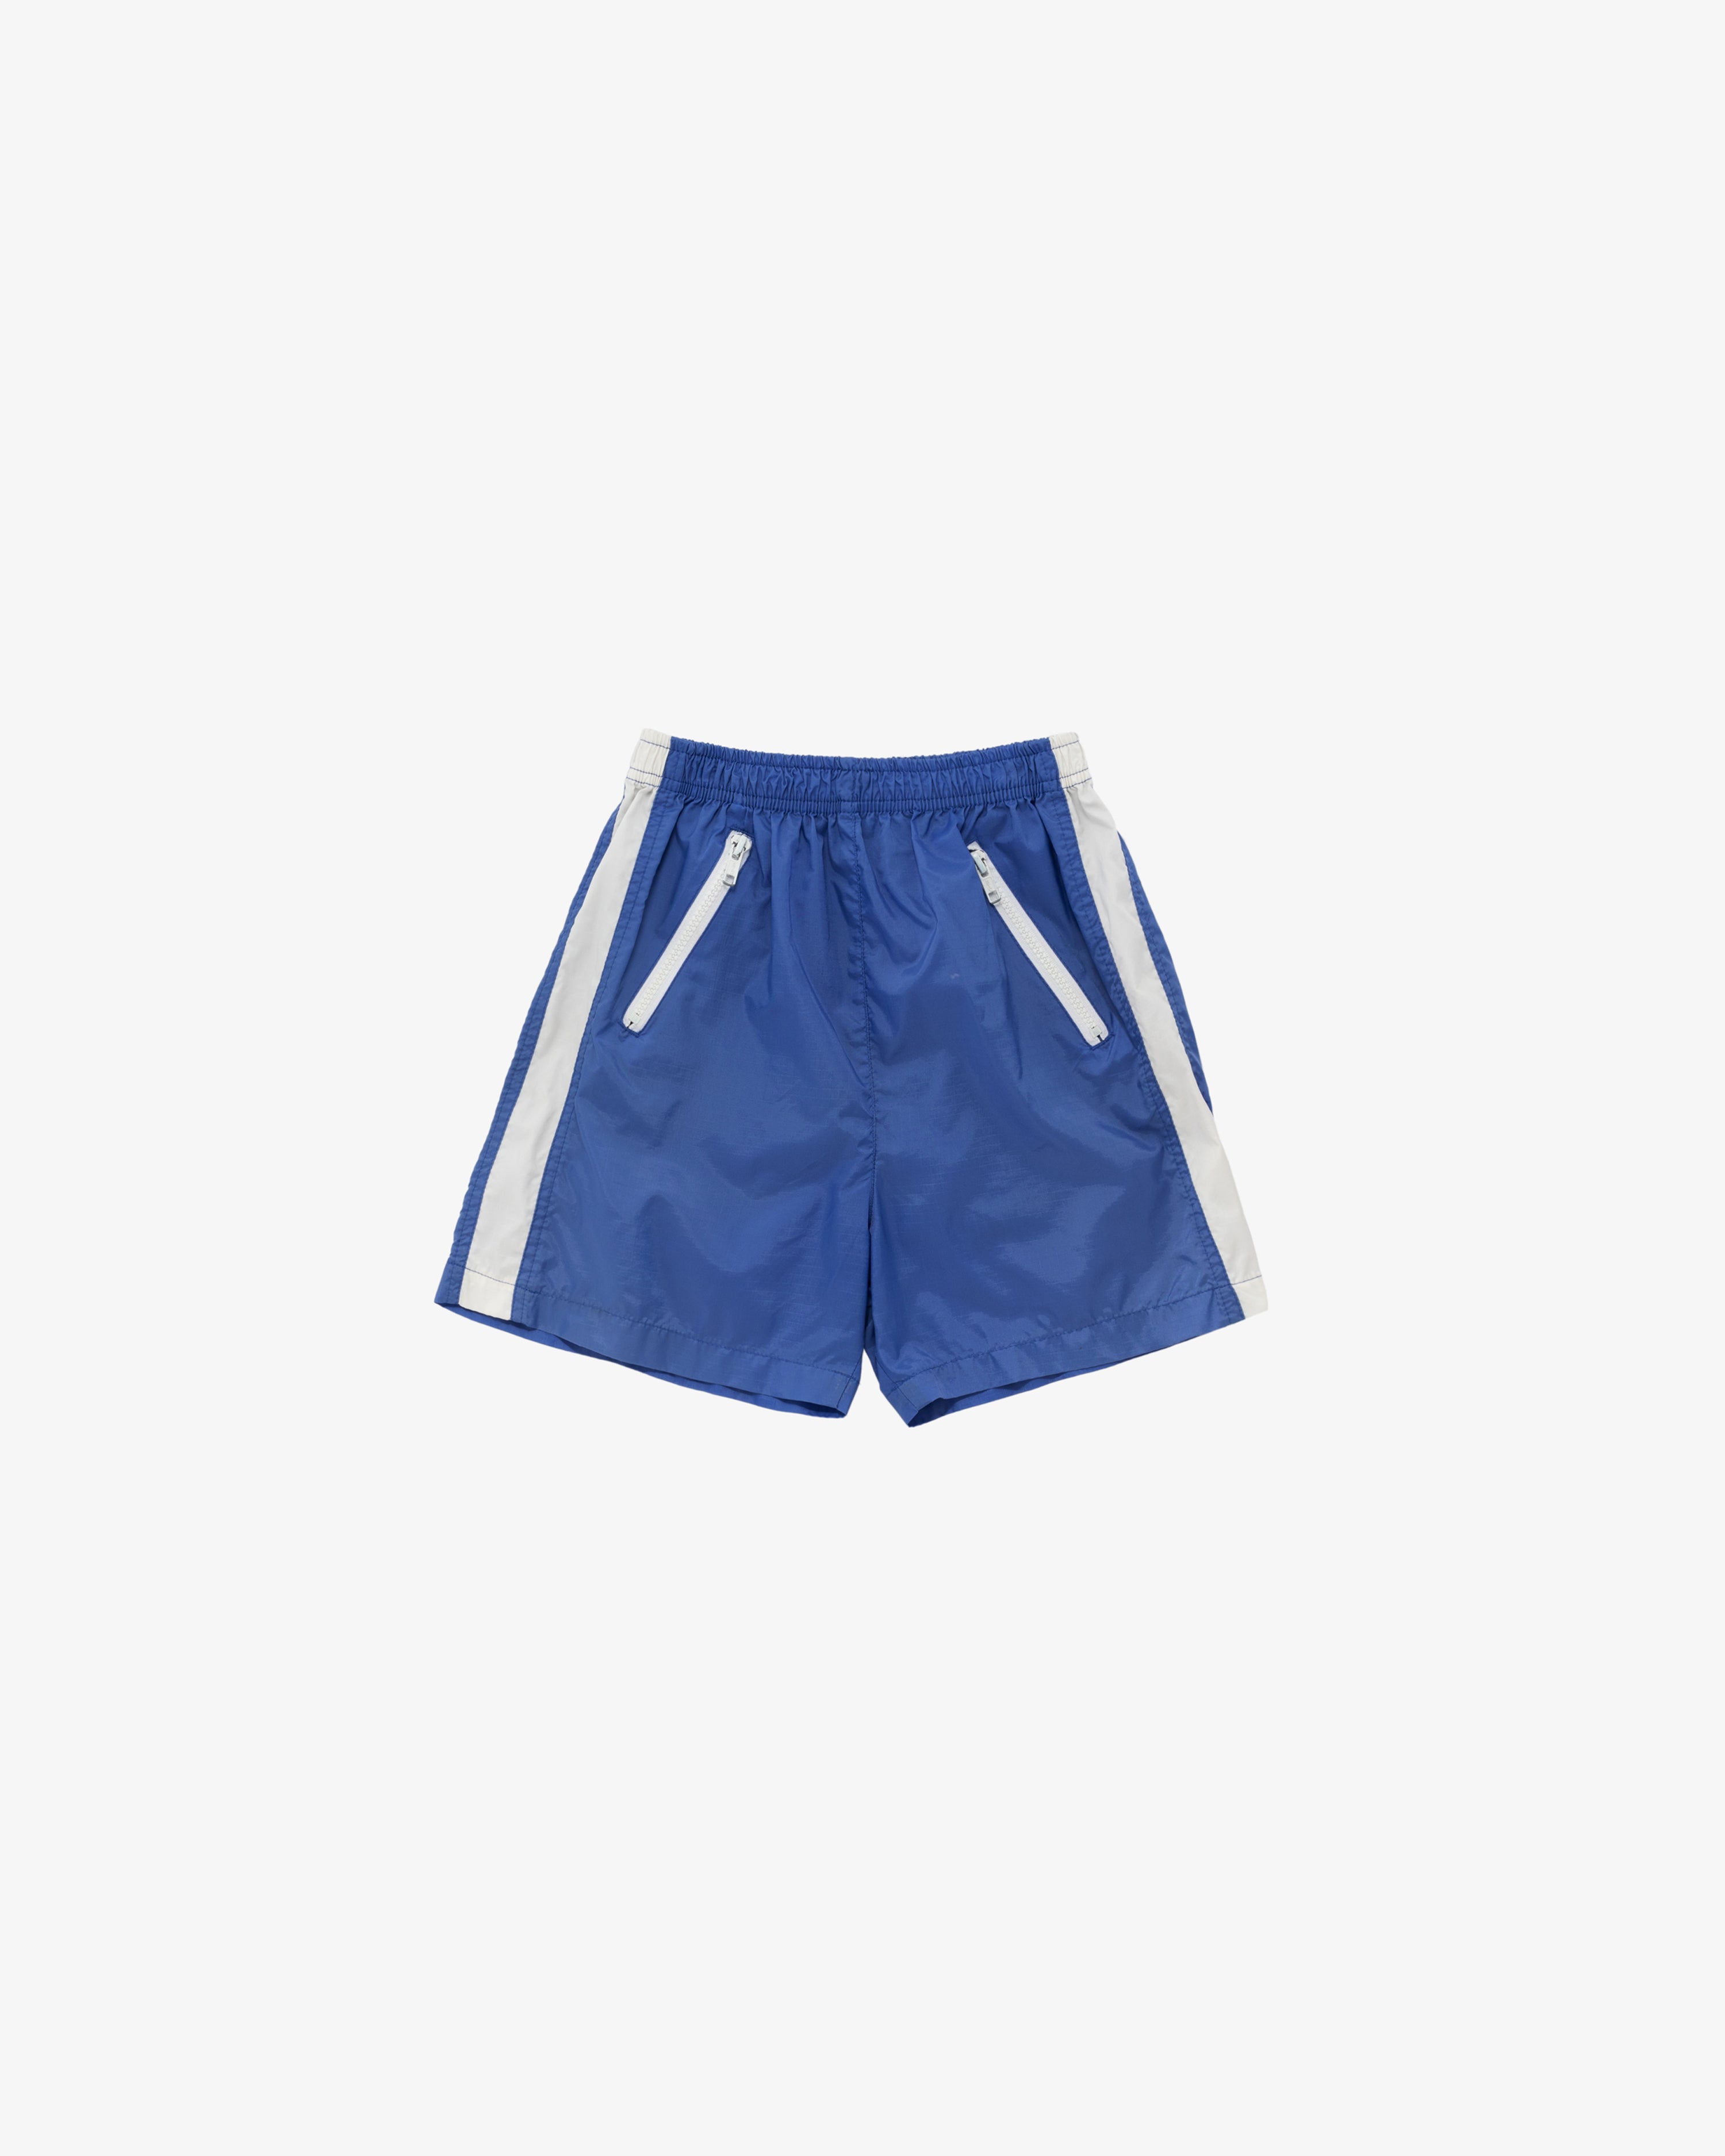 Vintage Kids Athletic Shorts